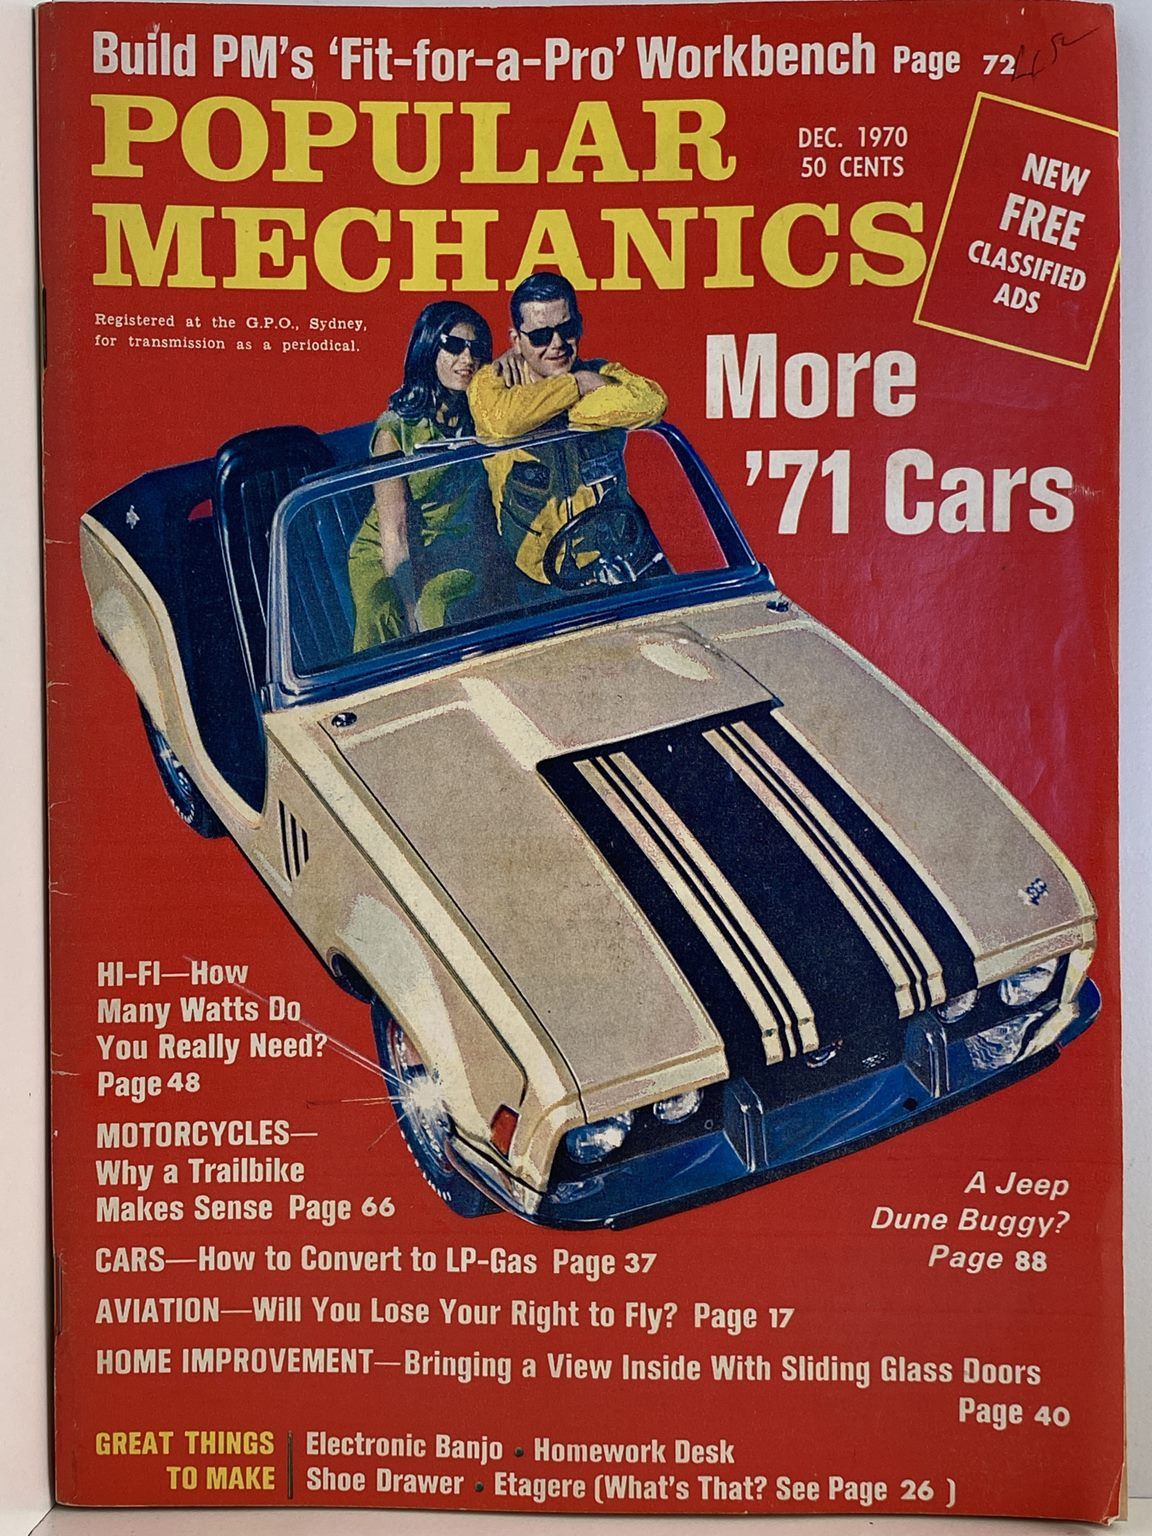 VINTAGE MAGAZINE: Popular Mechanics - Vol. 134, No. 4 - December 1970